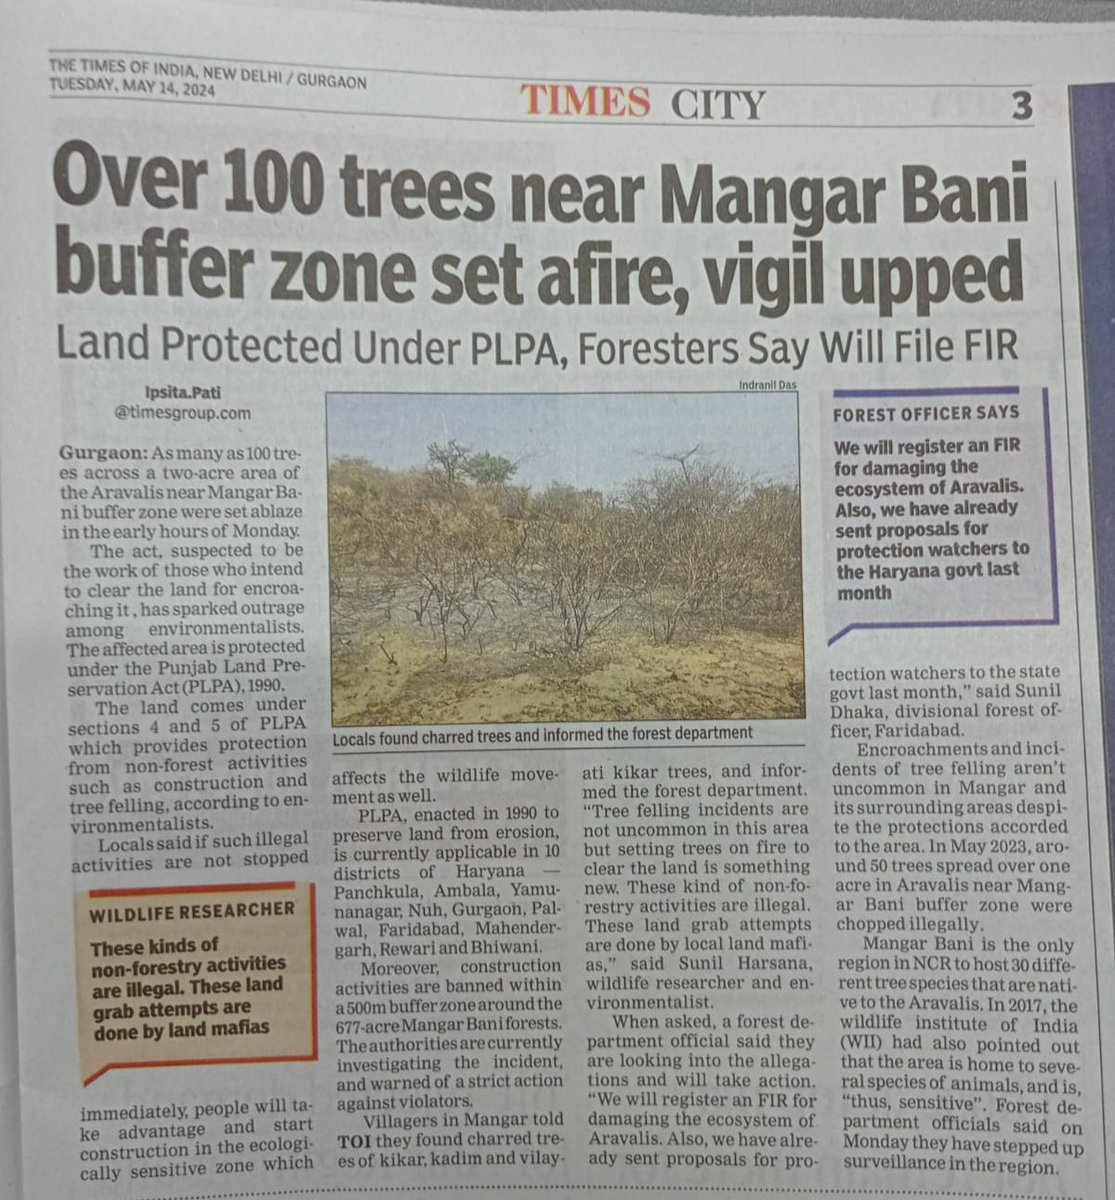 Land mafia set 100 trees on fire near protected Mangar Bani buffer zone @SunilHarsana @lifeindia2016 @rahuulchoudhary @debadityo @rameshpandeyifs Read the full story here shorturl.at/bOZ37